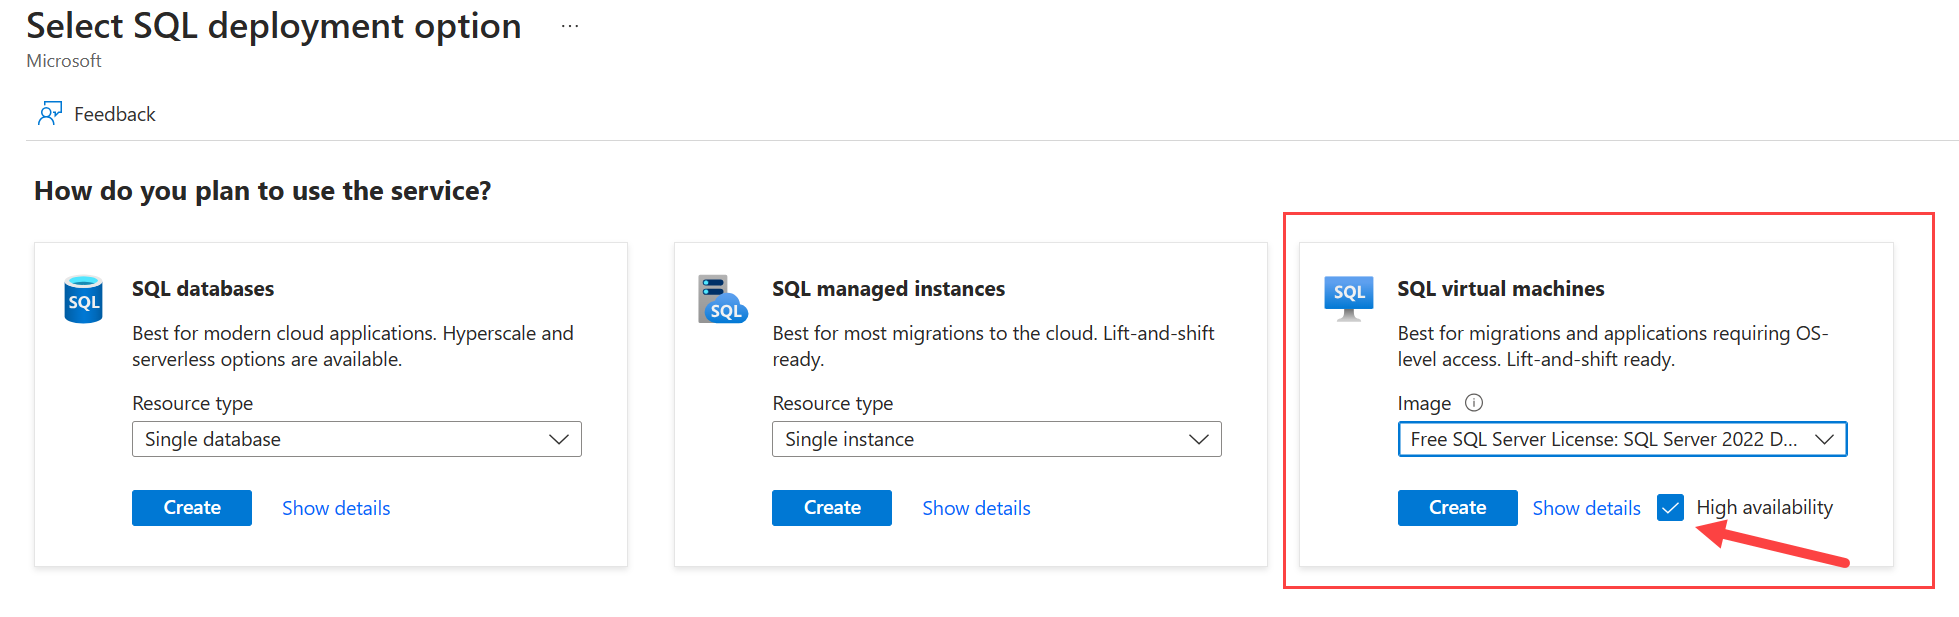 Azure 入口網站的螢幕擷取畫面，其中顯示選取SQL Server部署選項的頁面，並已選取高可用性。